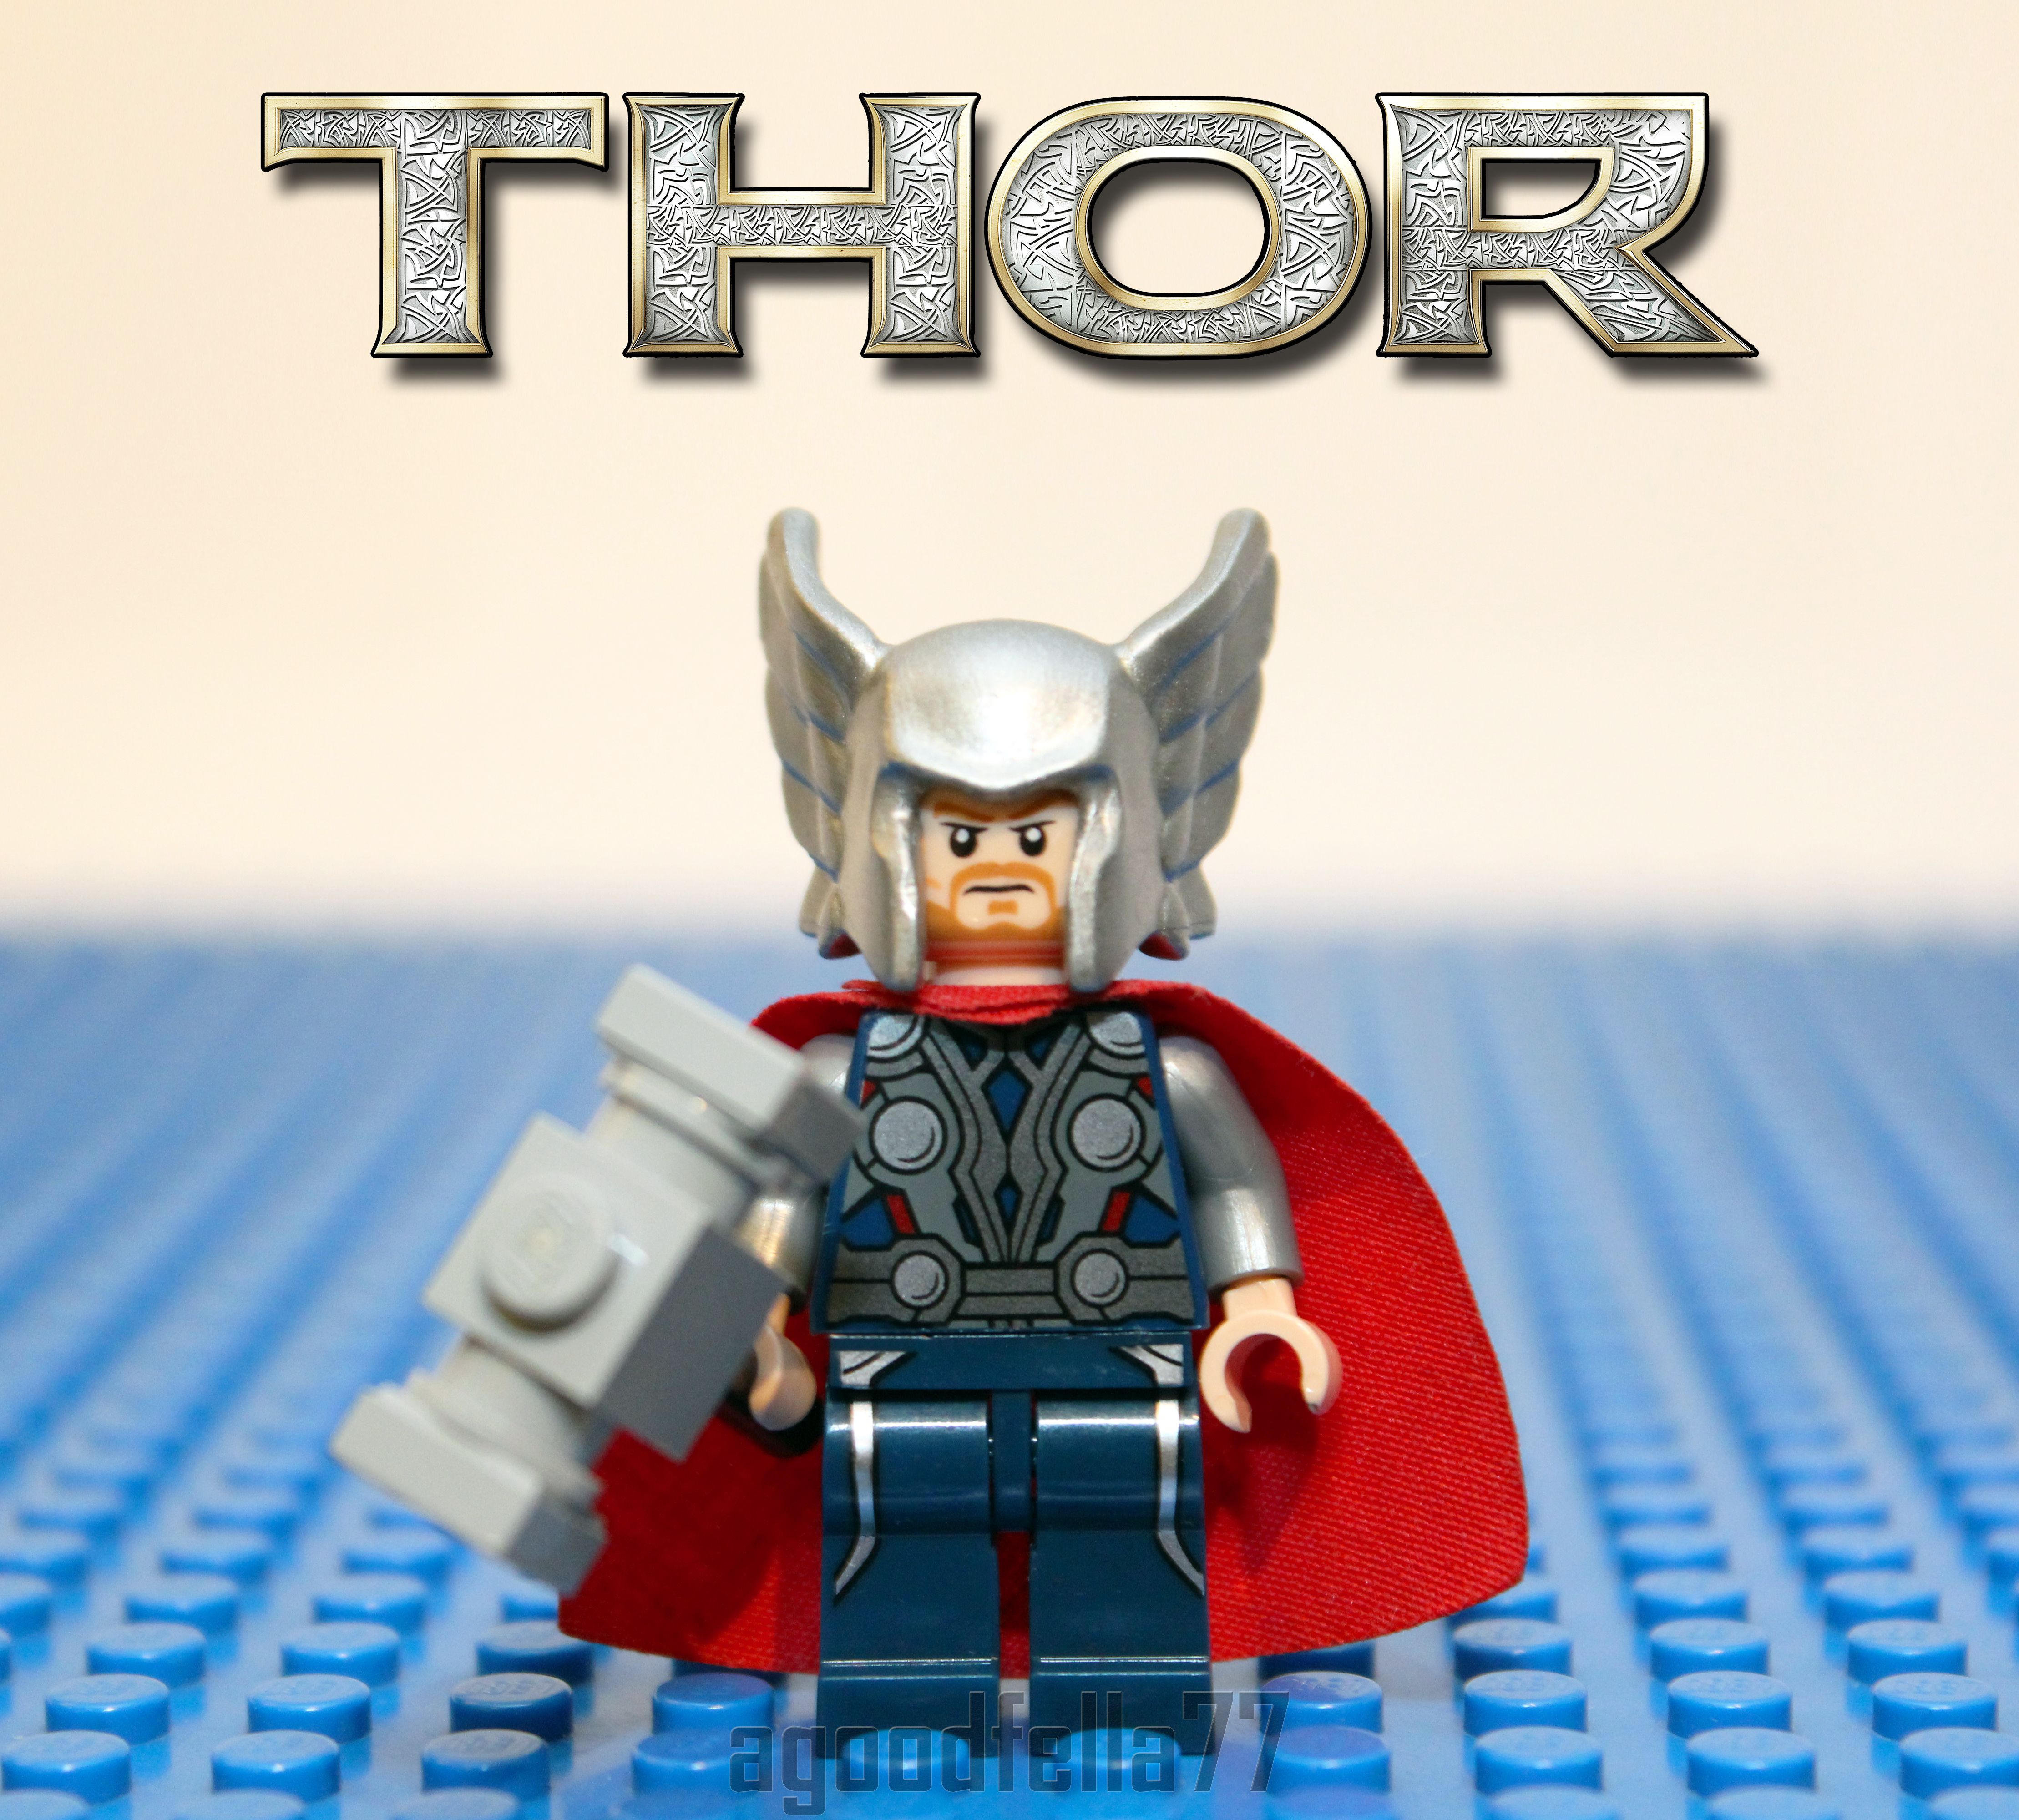 Wallpaper, LEGO, custom, Thor, marvel, mcu, avengers, moc, minifigures, legomarvel 4437x4000